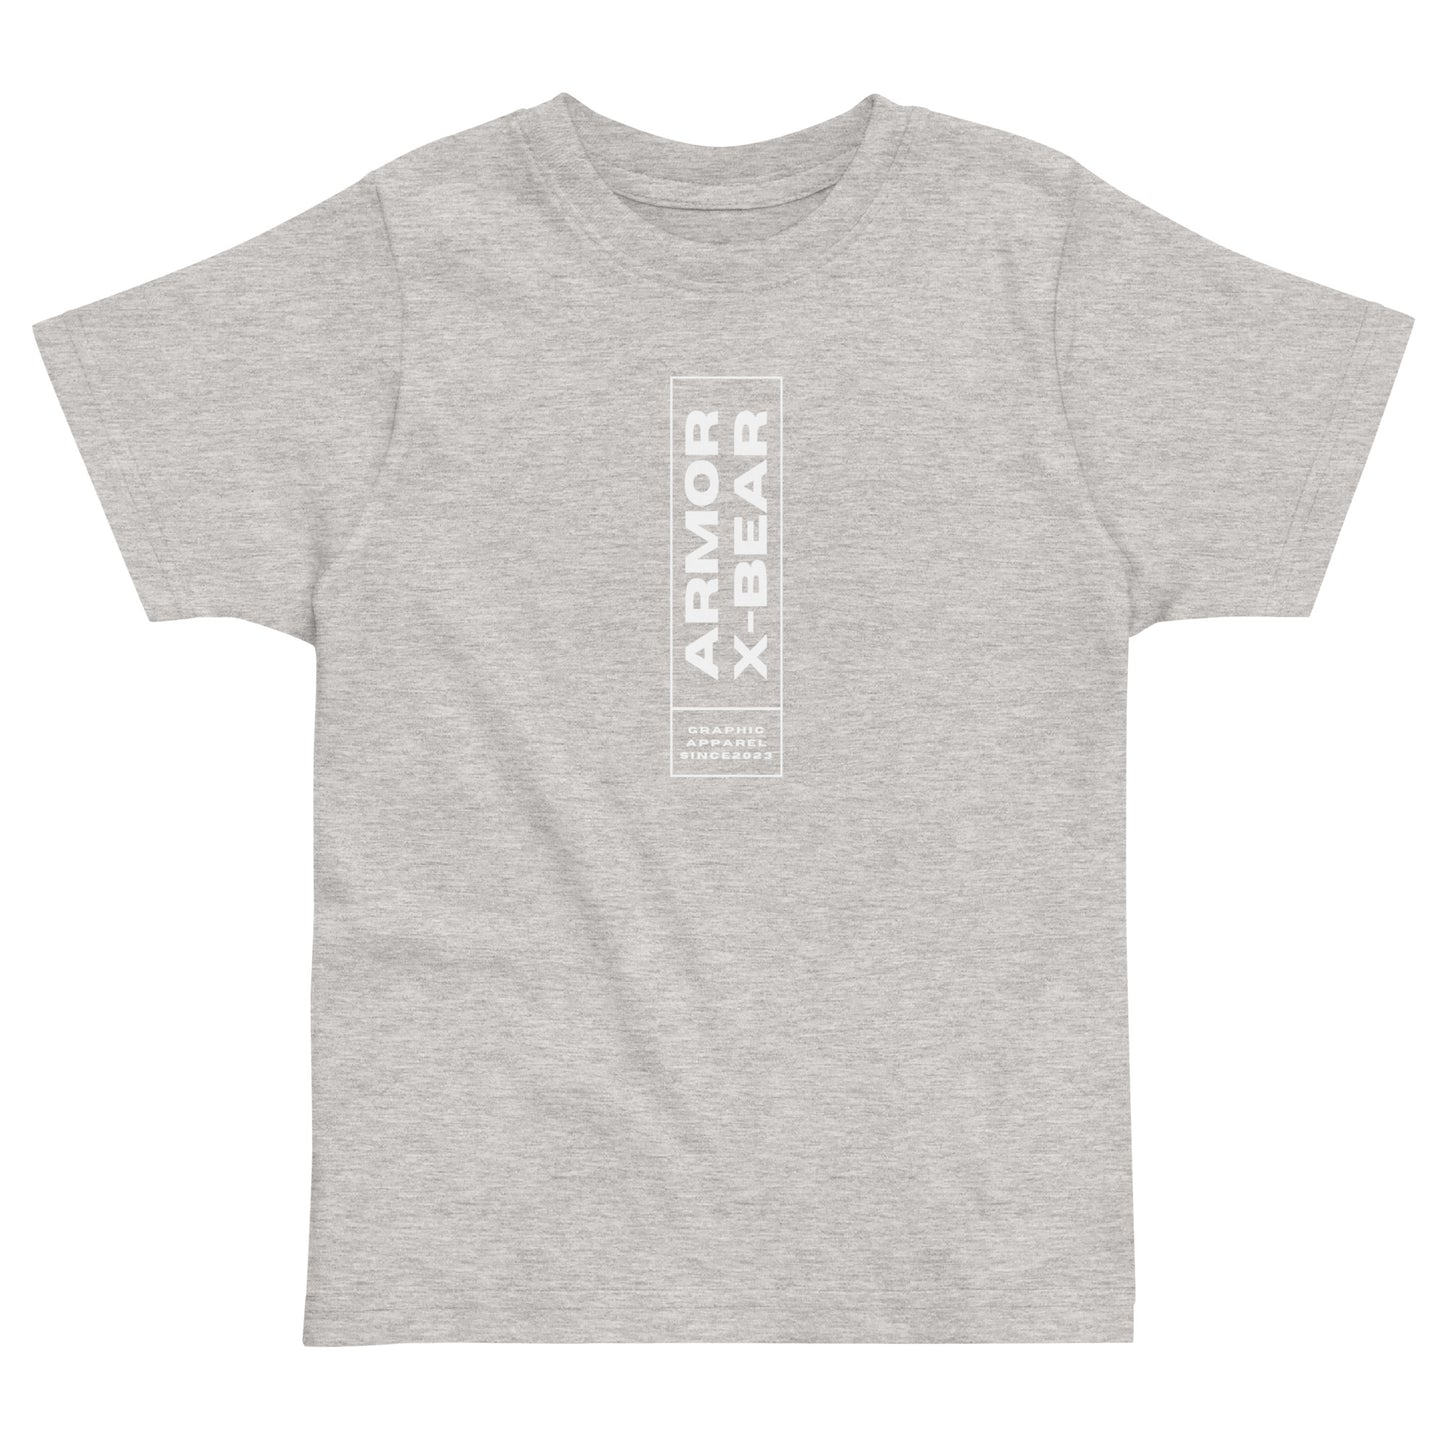 ARMOR X-BEAR LIMITED DESIGN LOGO TYPE-A | Kids Toddler jersey t-shirt | 5colors